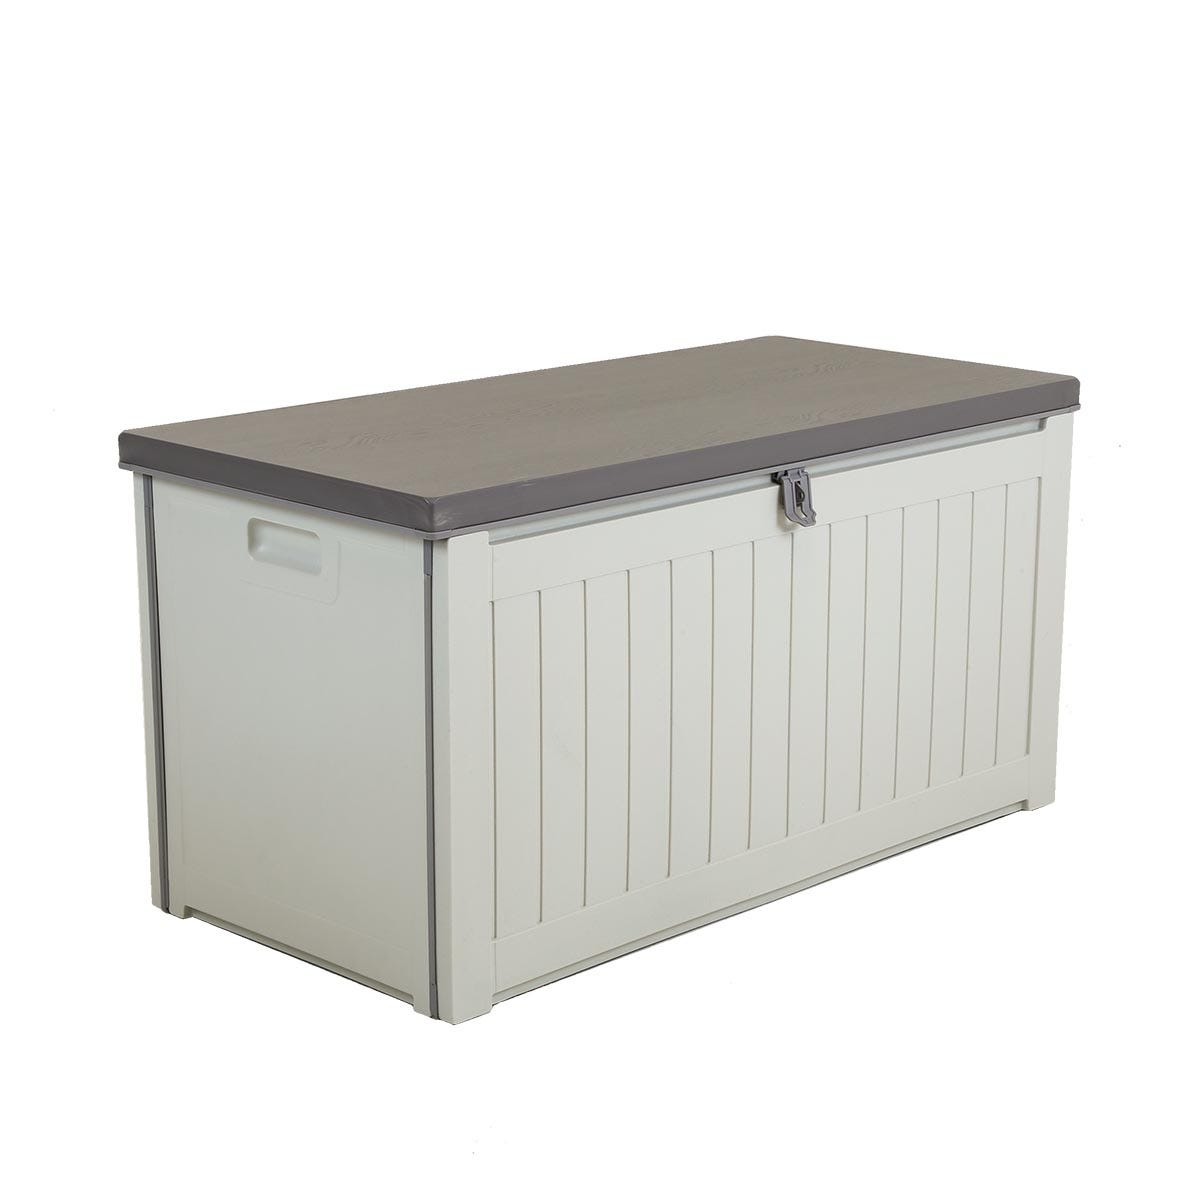 Charles Bentley 190l Outdoor Plastic Storage Box Beige And Grey